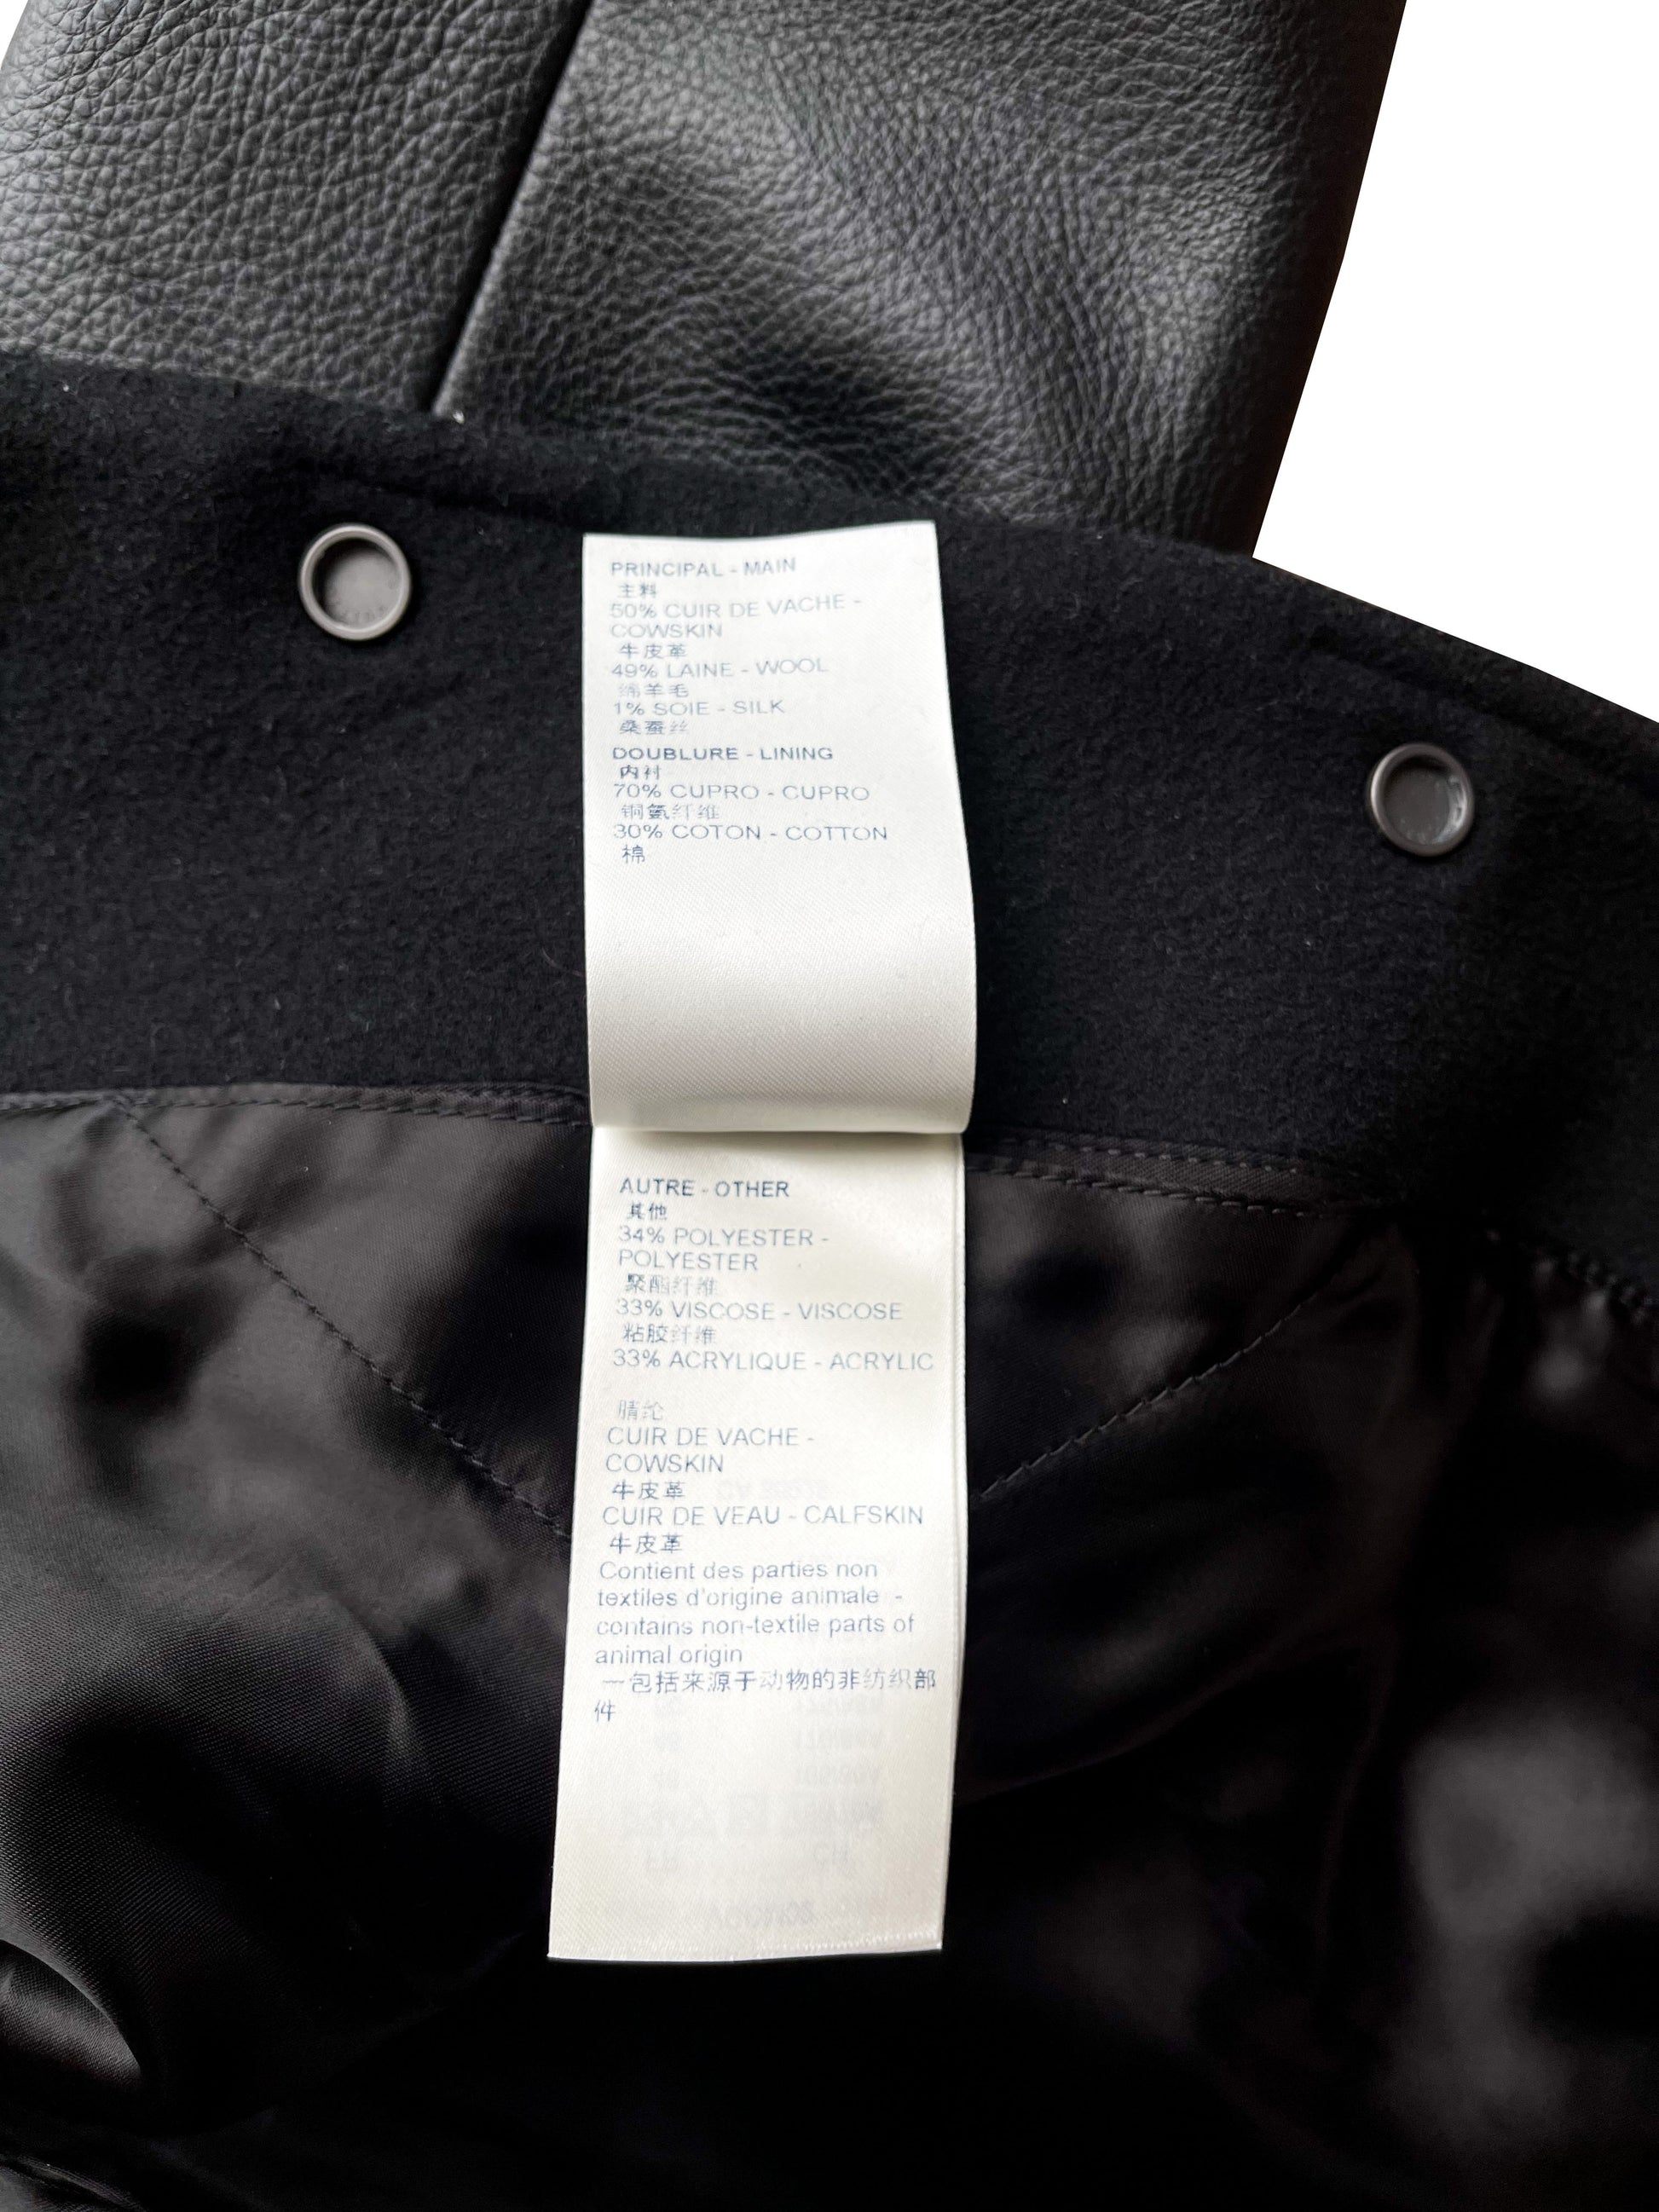 Louis Vuitton, Jackets & Coats, Louie Vuitton X Nba Bomber Jacket For Men  Women Or Kid Size 48